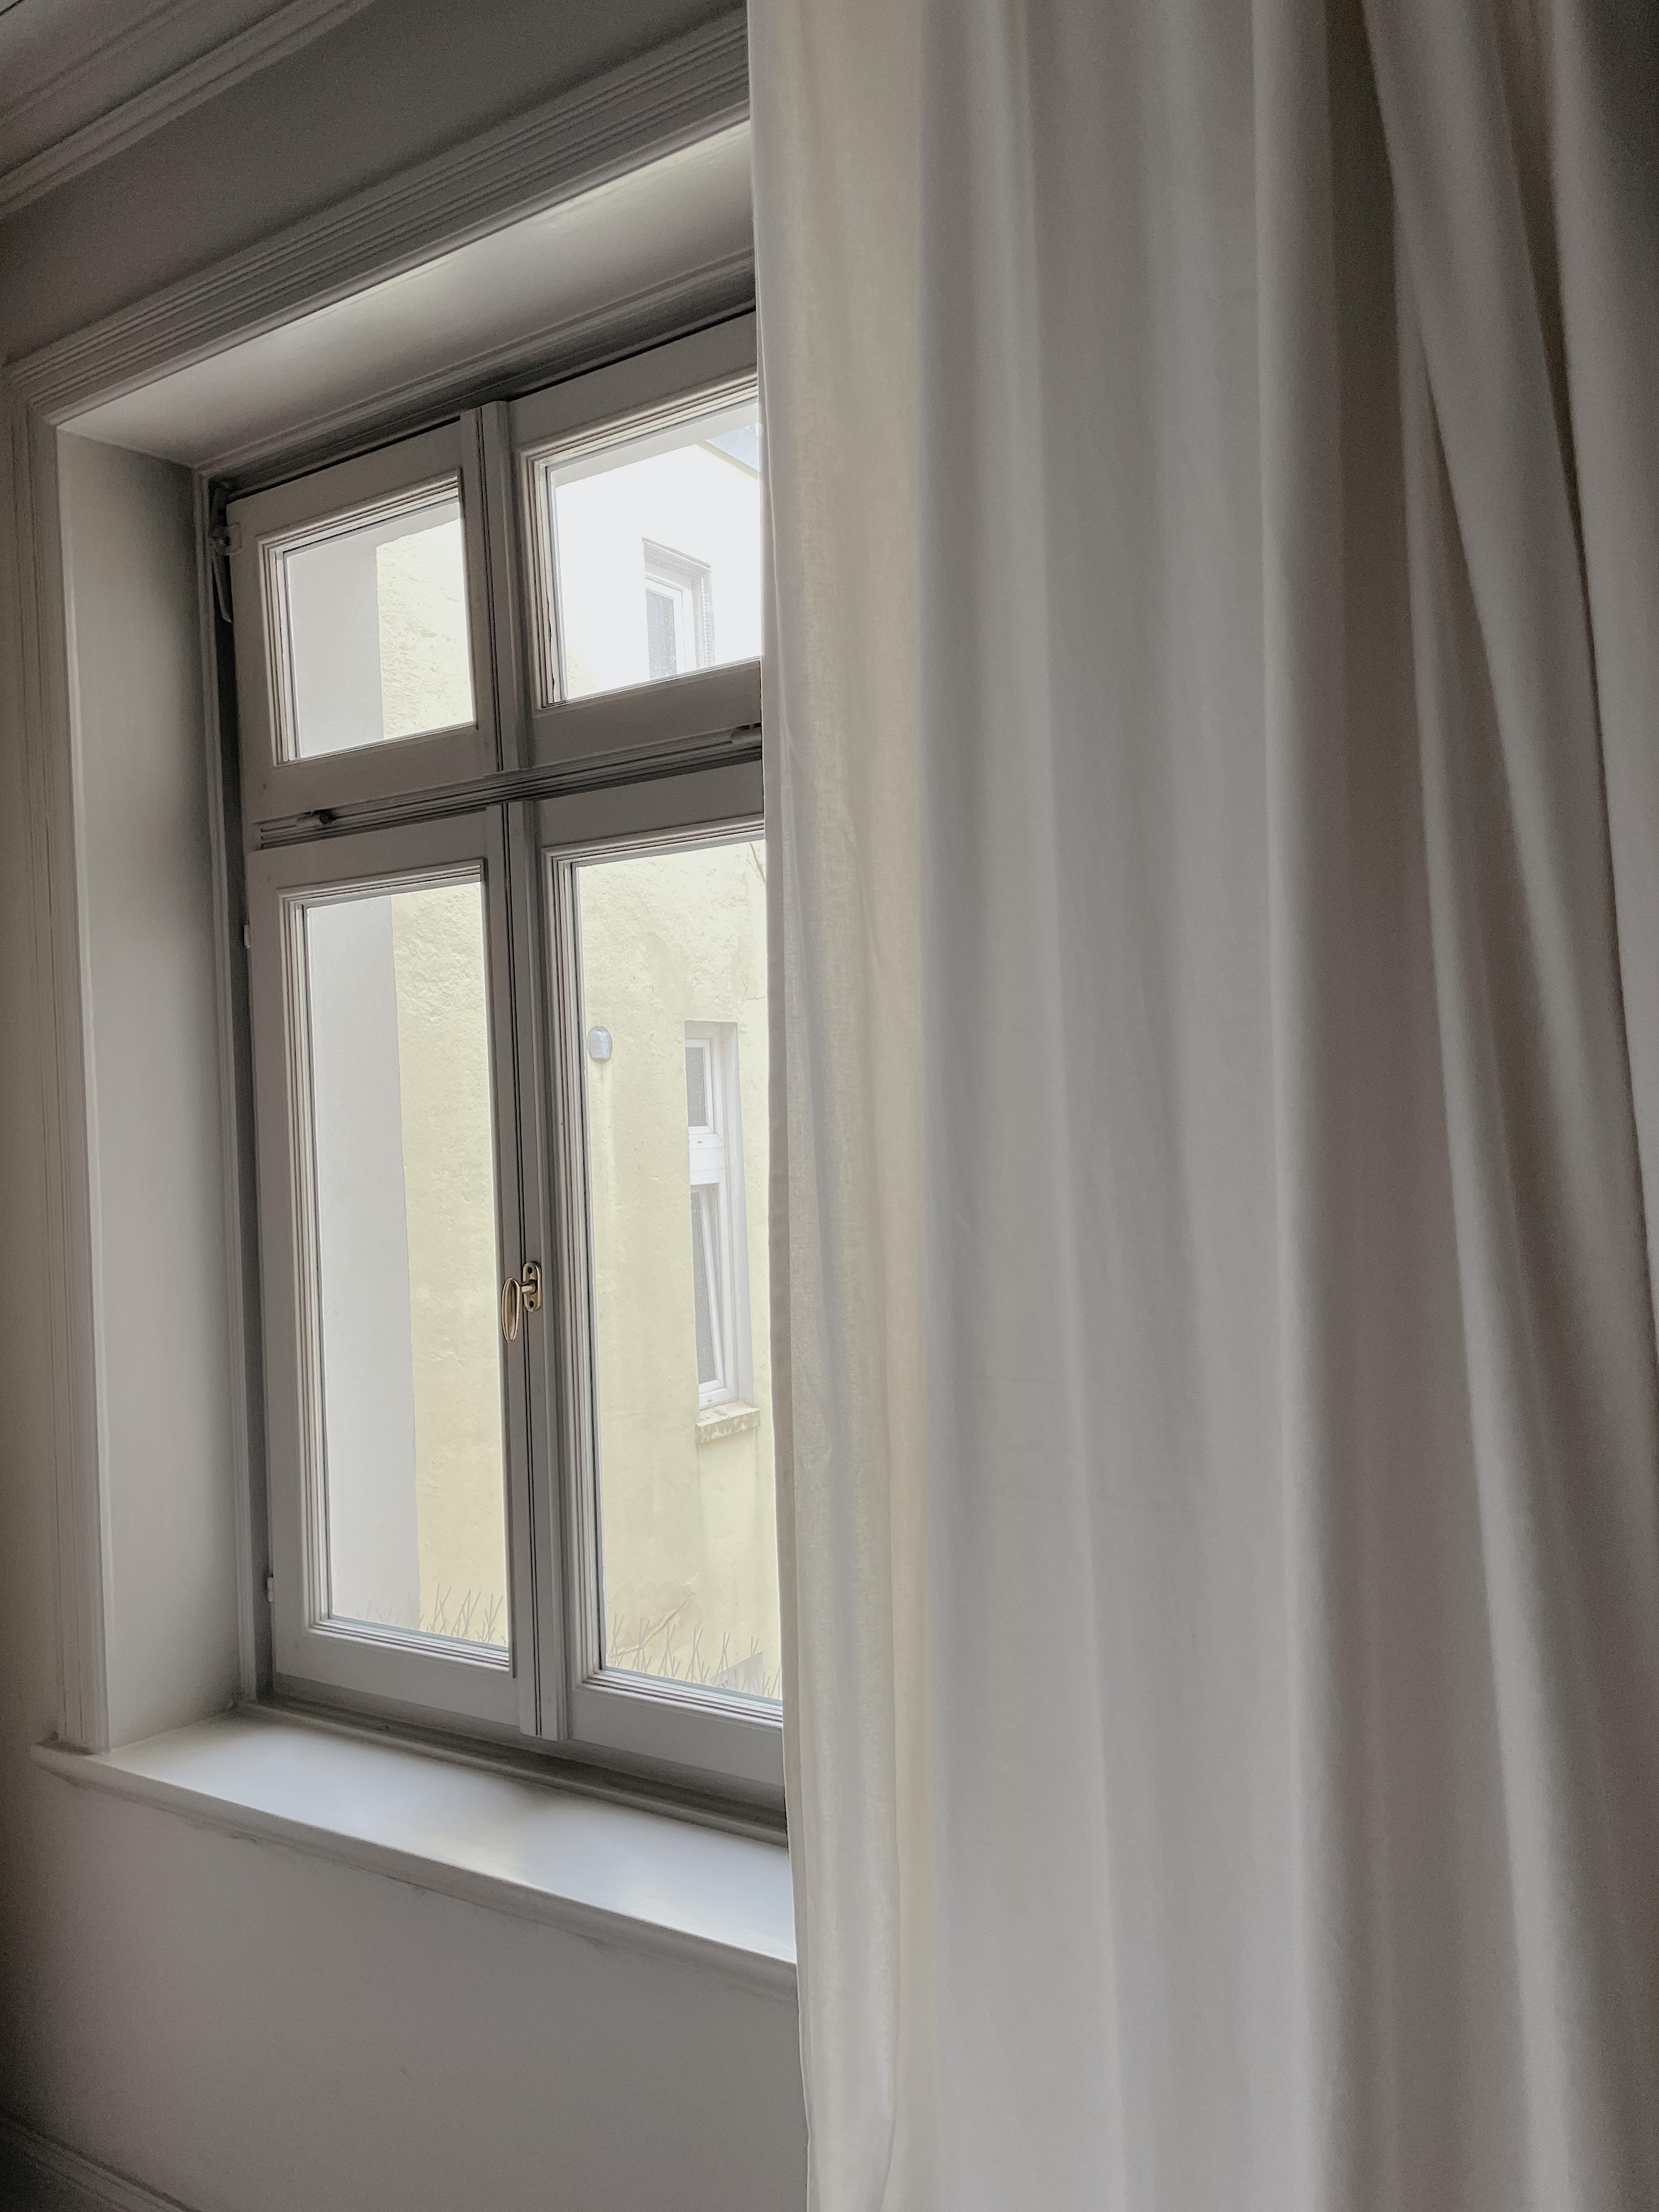 #window #curtain #ikea #altbau #nordicliving